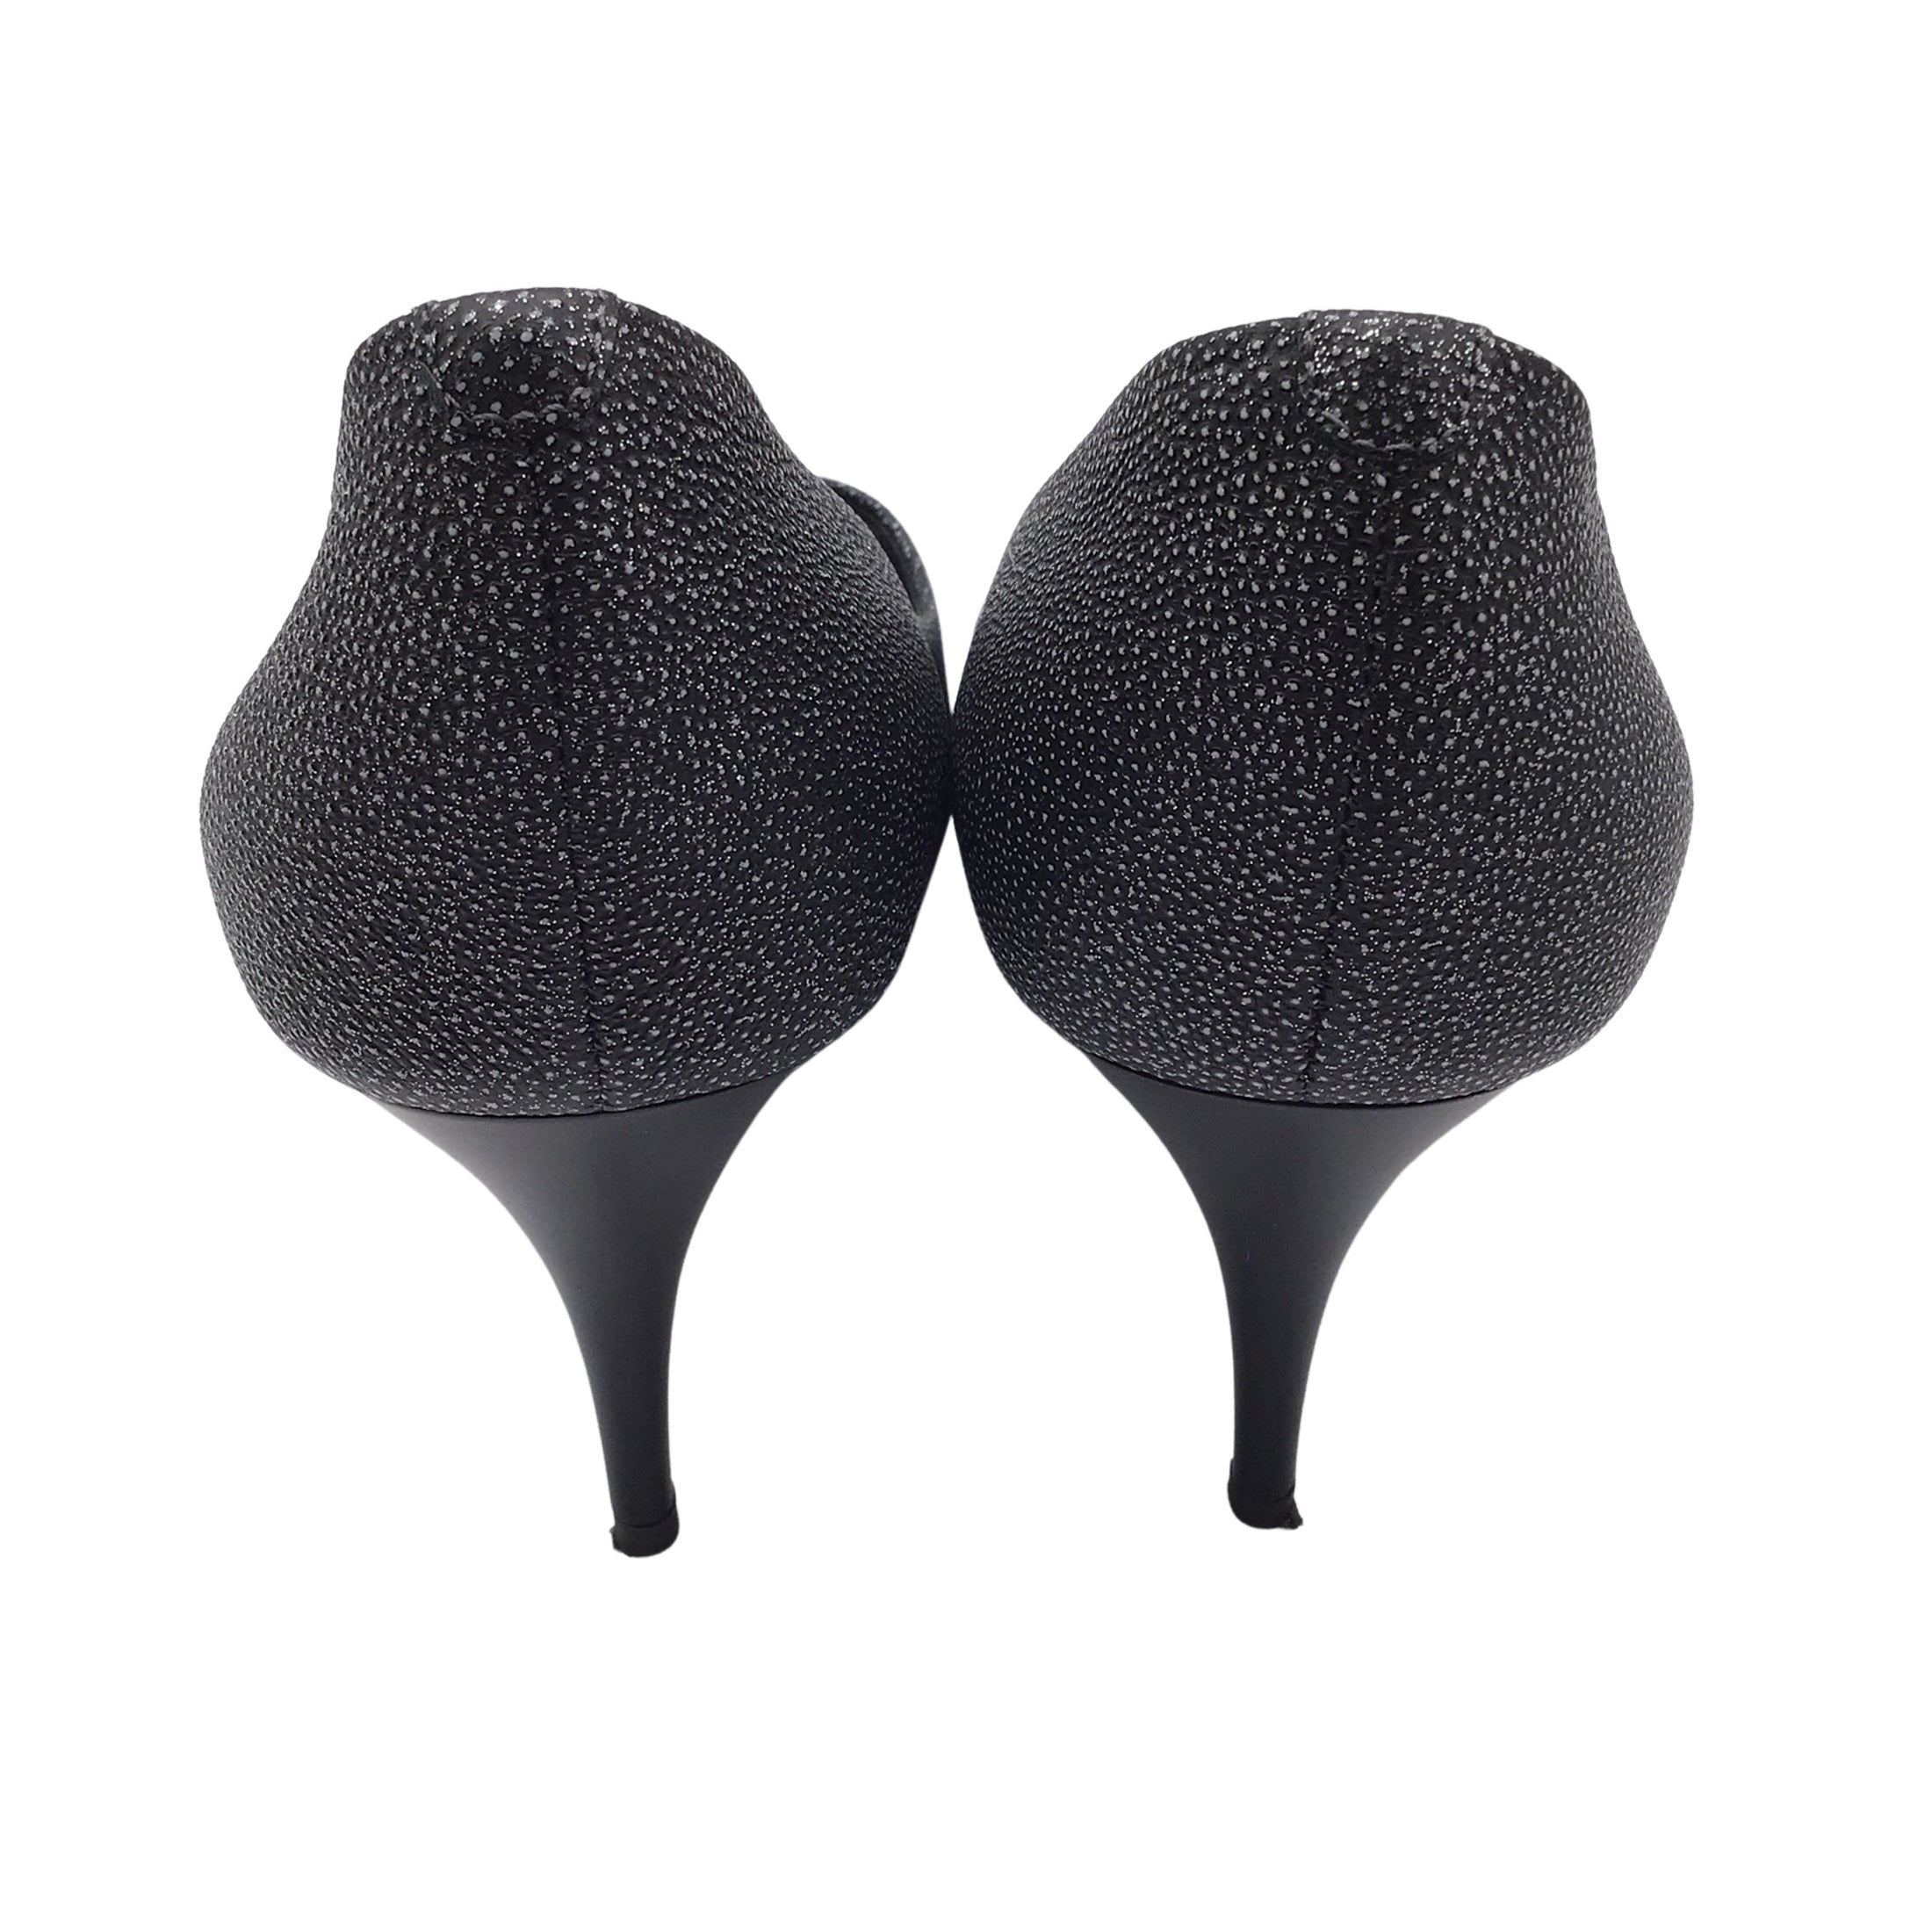 Giuseppe Zanotti Black / Grey Textured Leather Open-toe Pumps